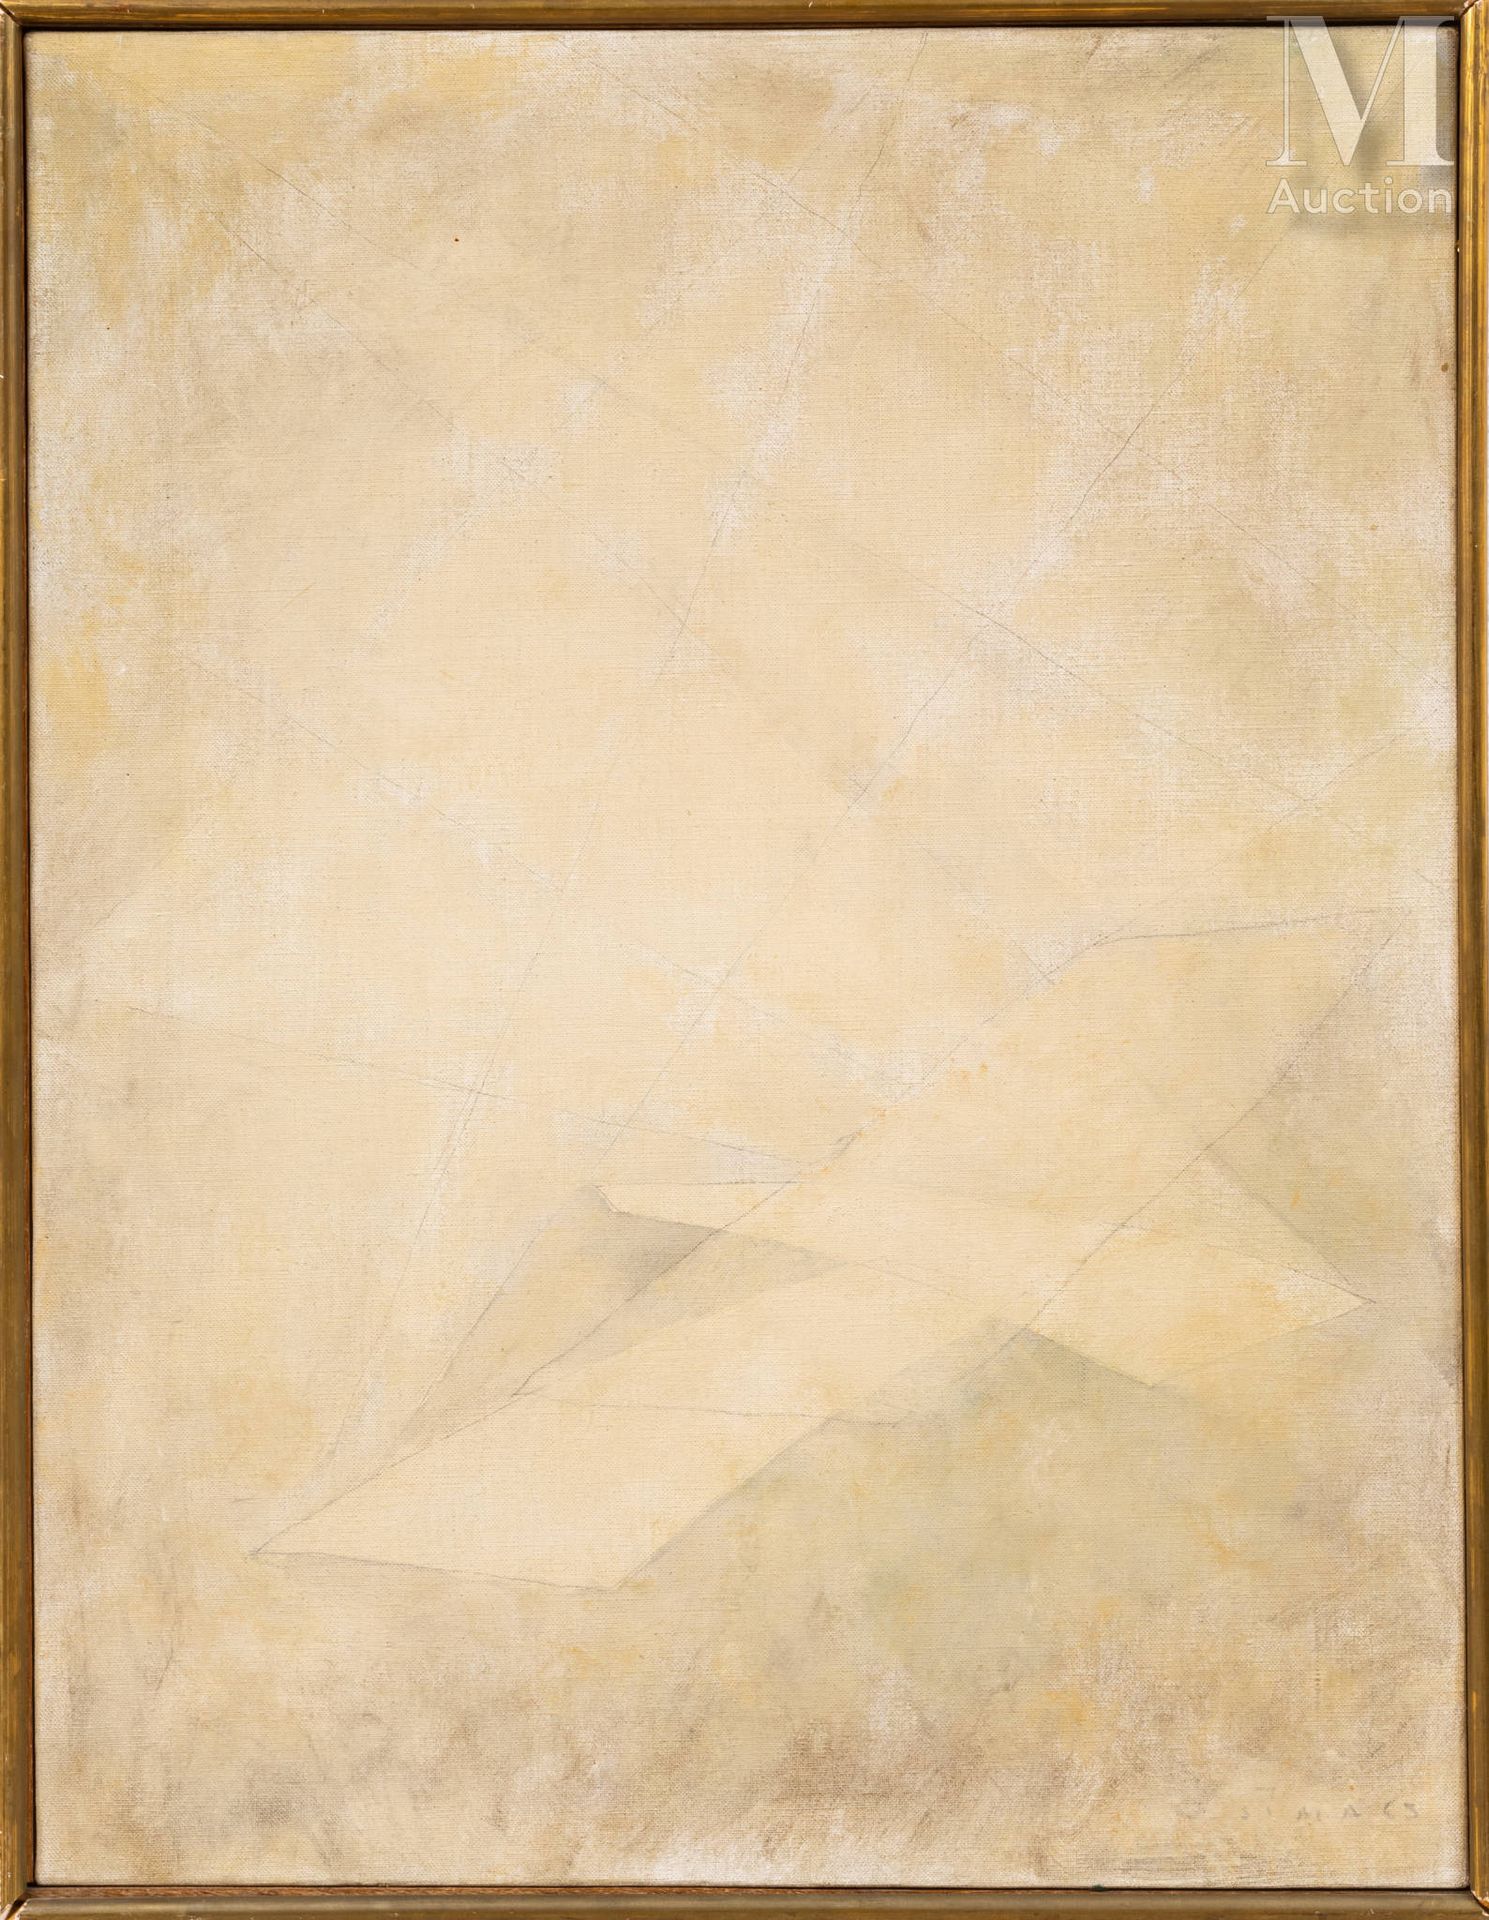 Josef SIMA (1891-1971) 创作, 1965

布面油画，右下角有签名和日期

65 x 50厘米



出处 :

私人收藏，巴黎